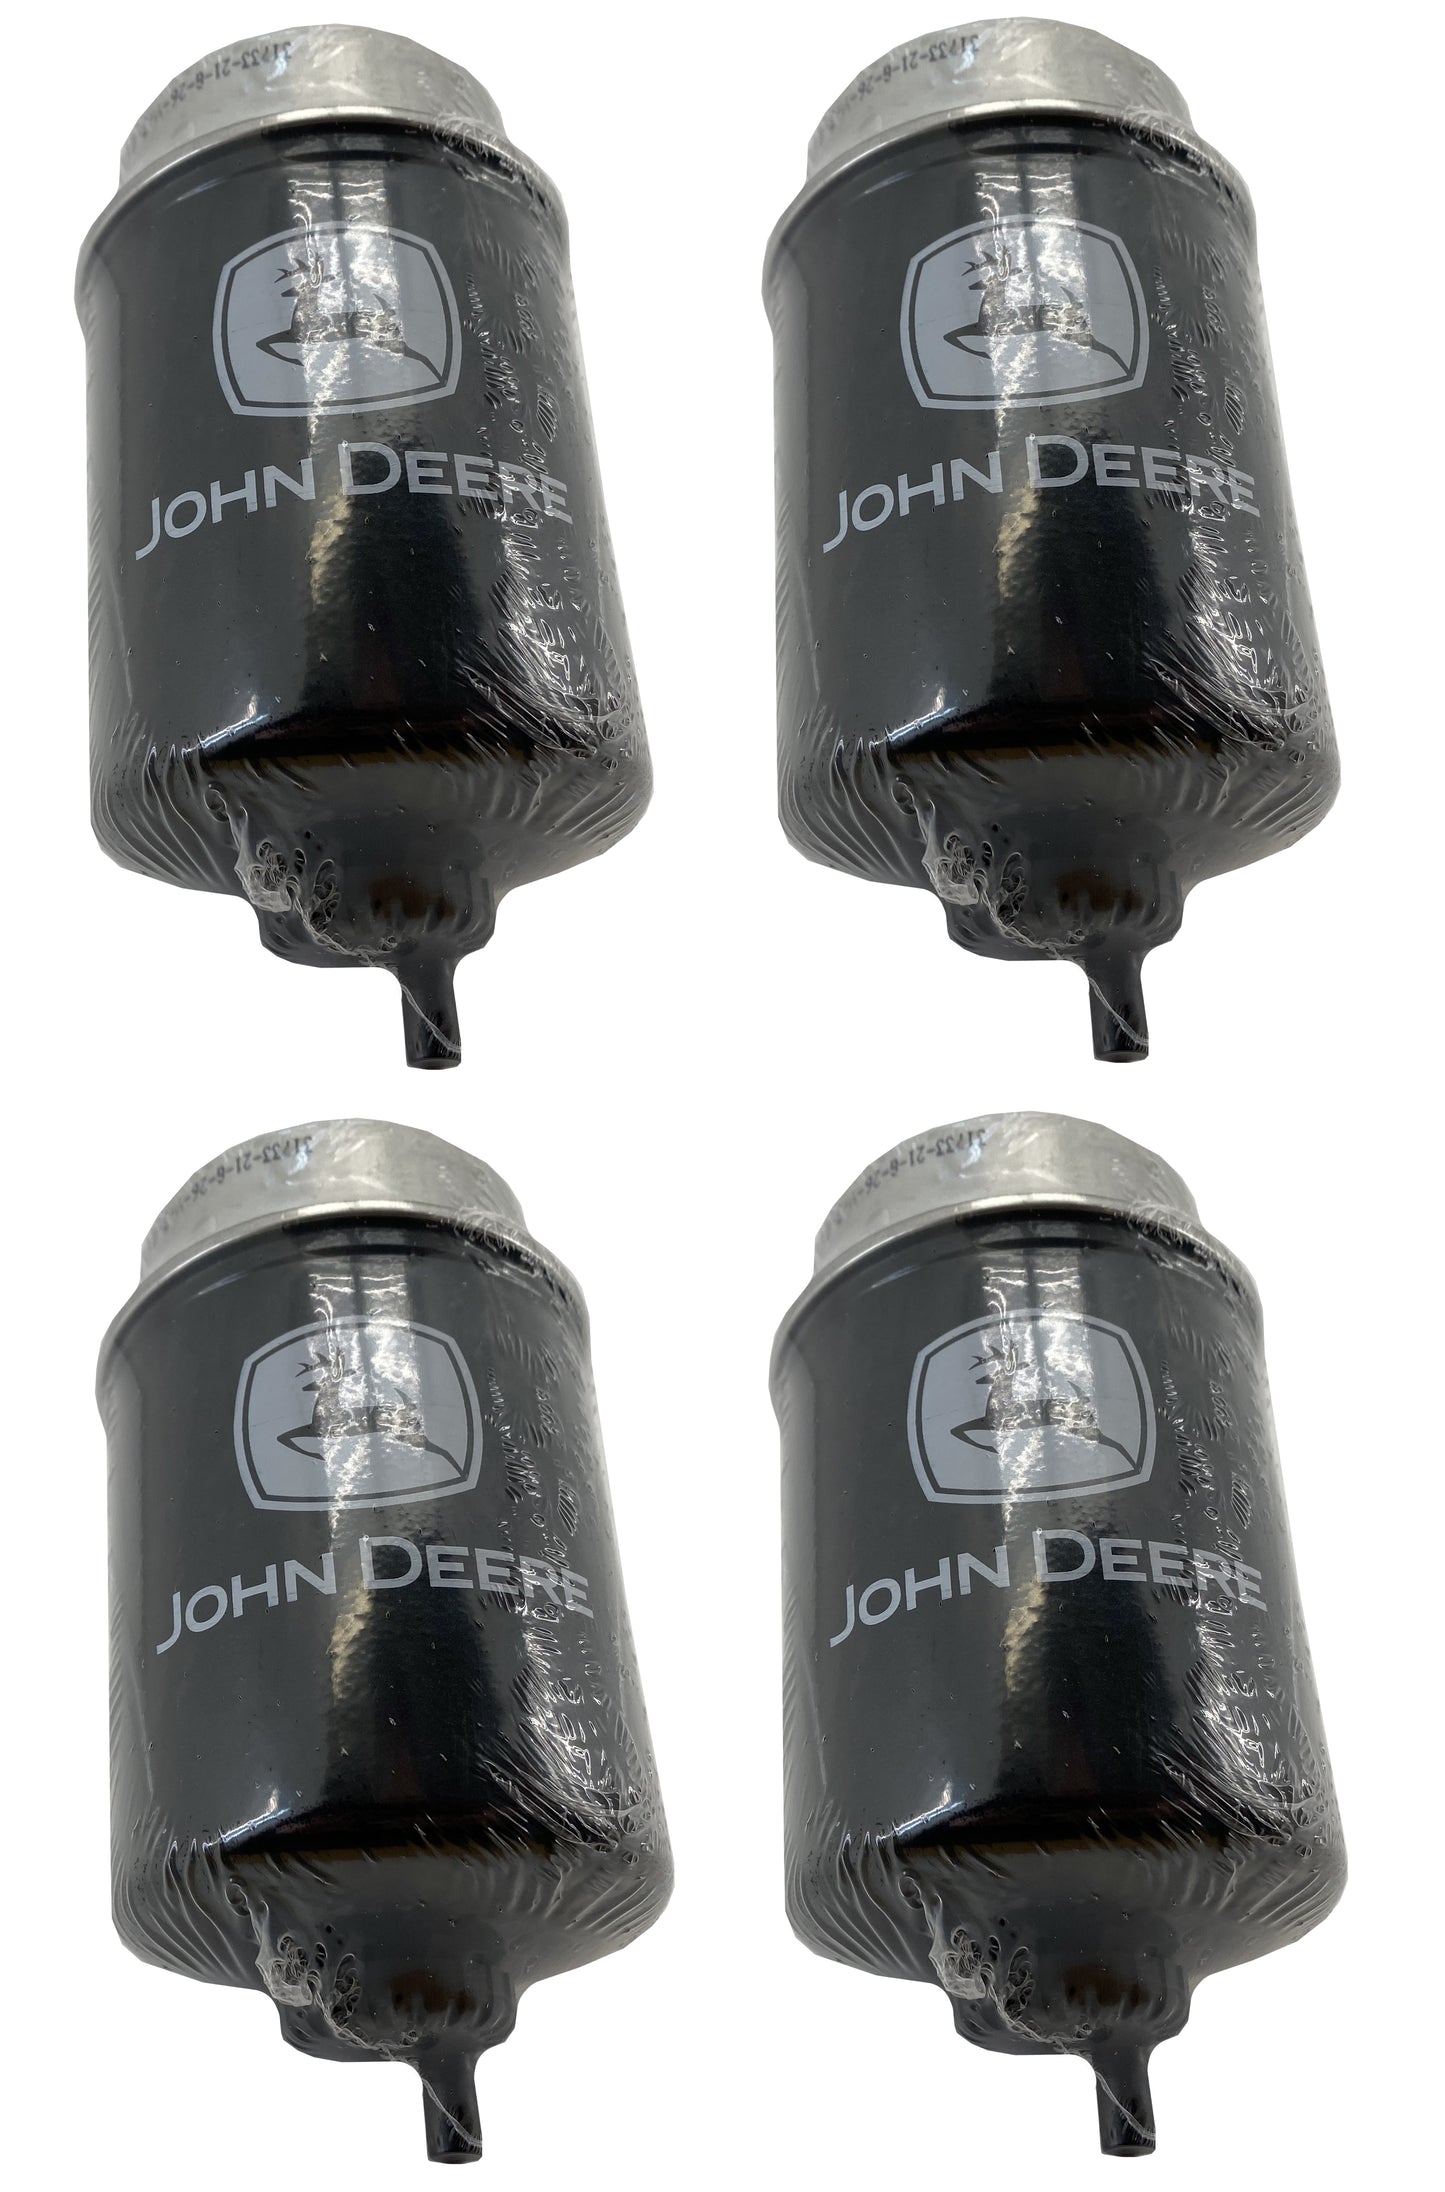 John Deere Original Equipment Filter Element 4 Pack - RE62419